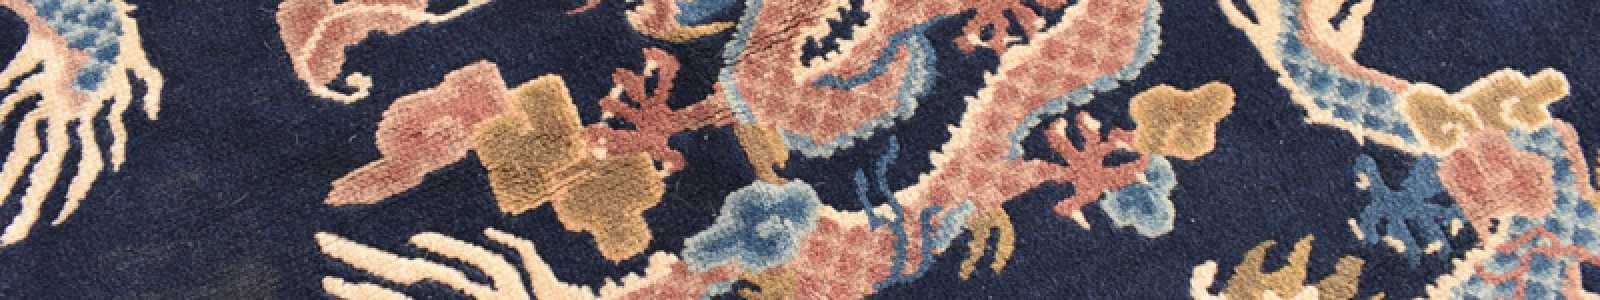 798 | Carpets, Textiles, Indian Art & Ethnologica